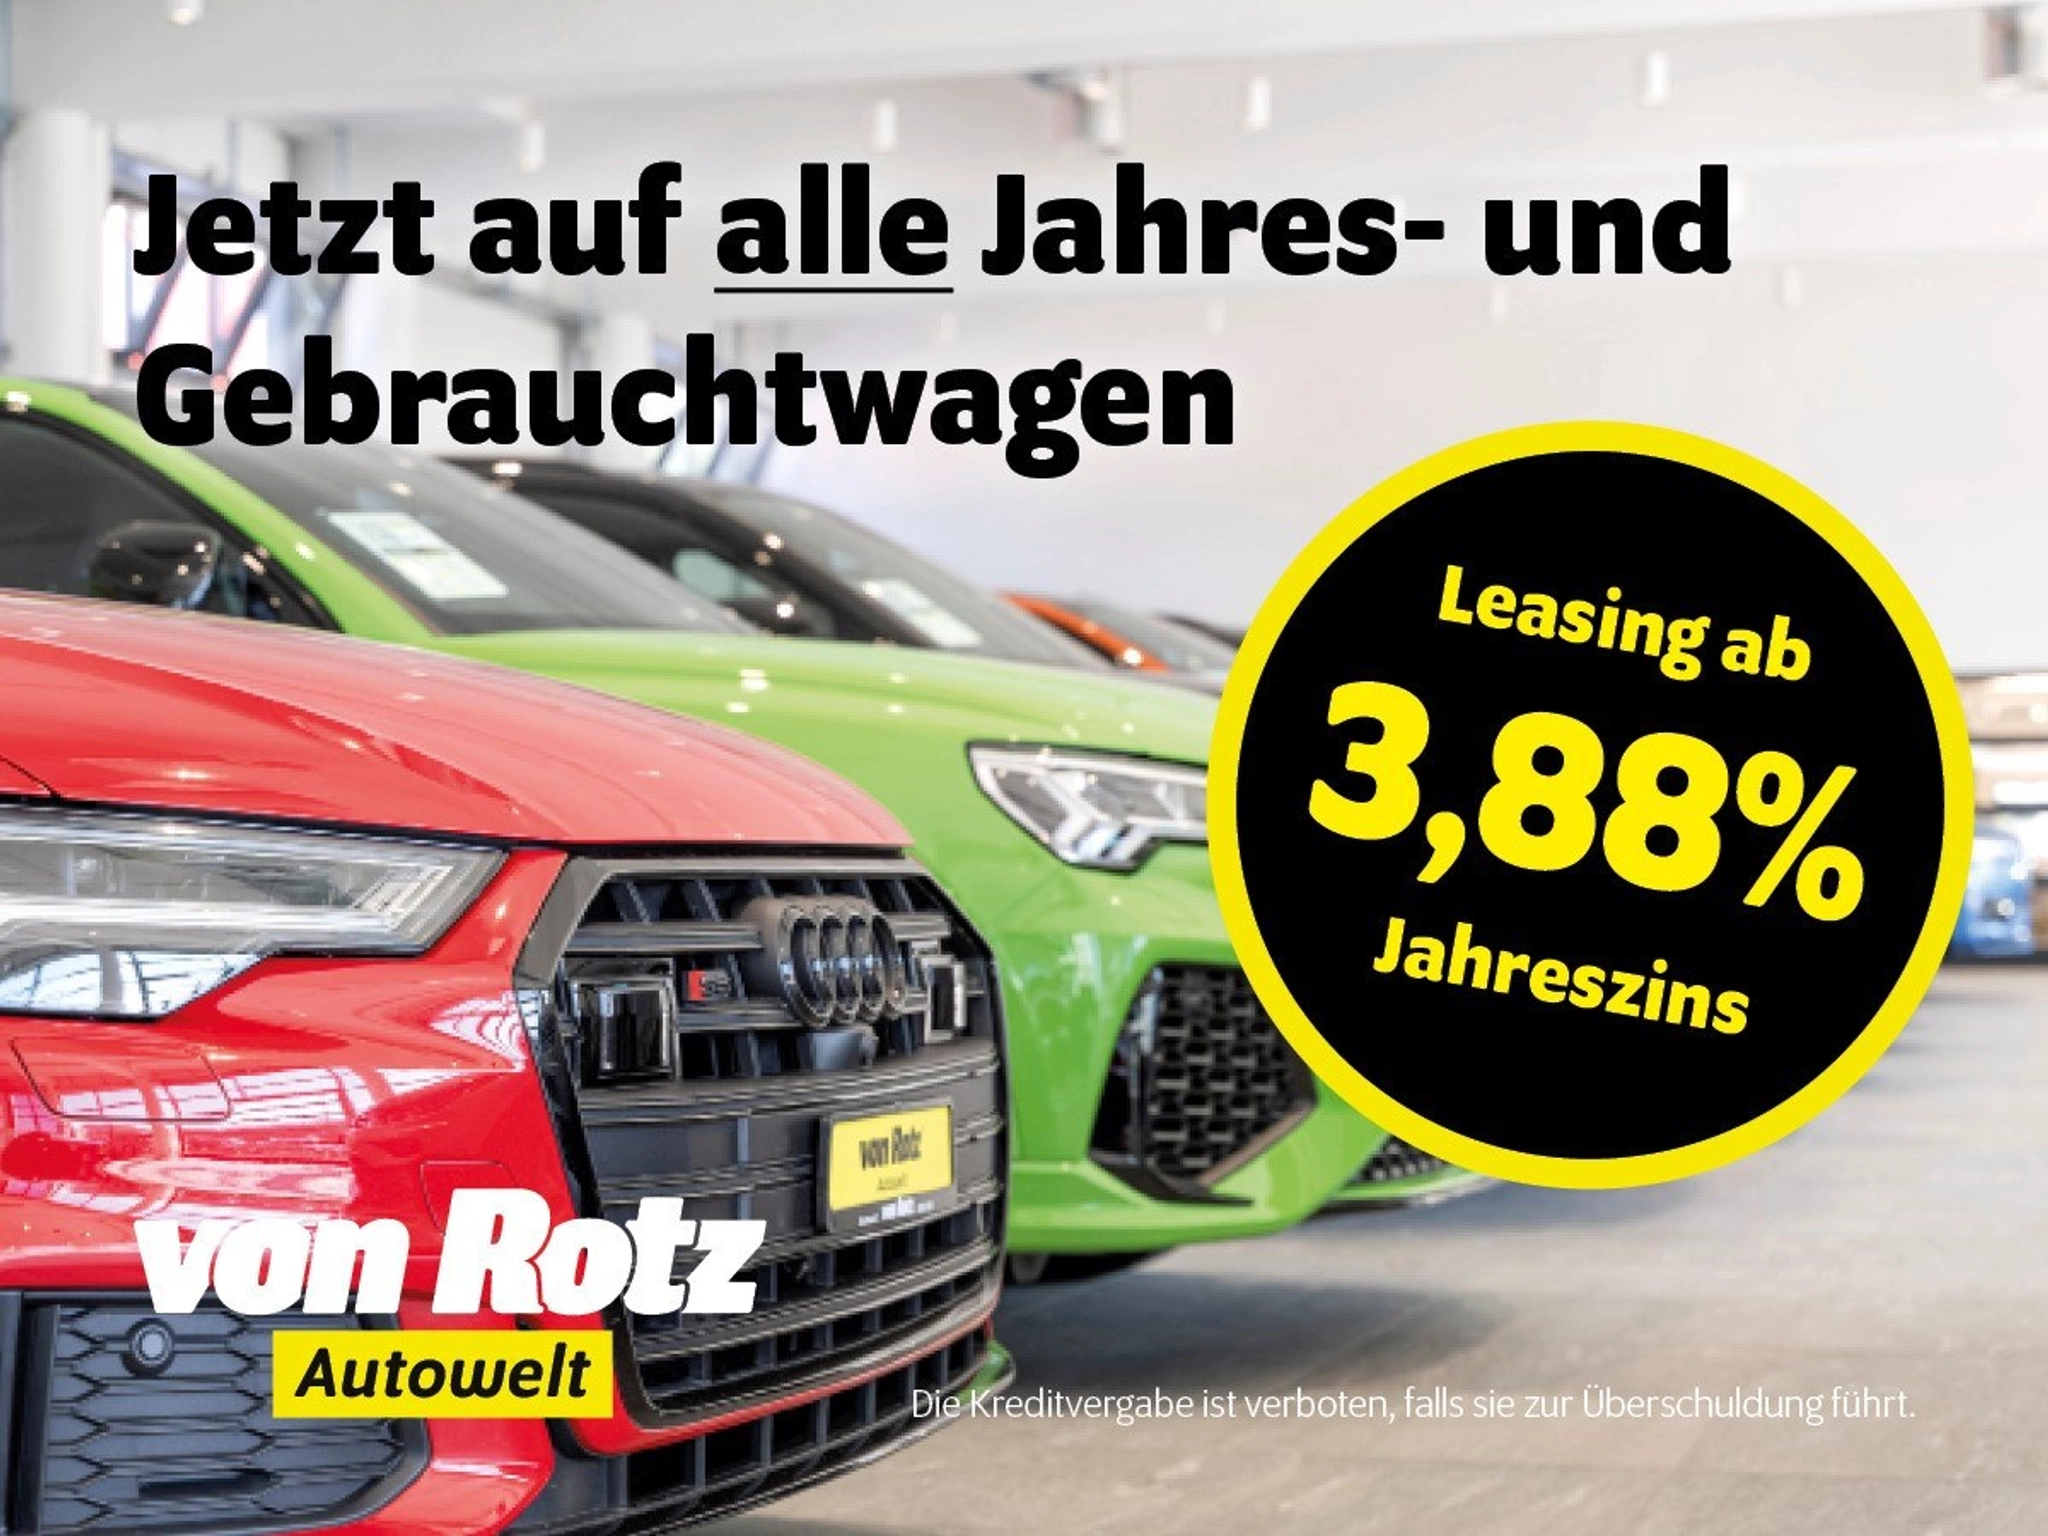 AUDI e-tron GT RS quattro - Auto Welt von Rotz